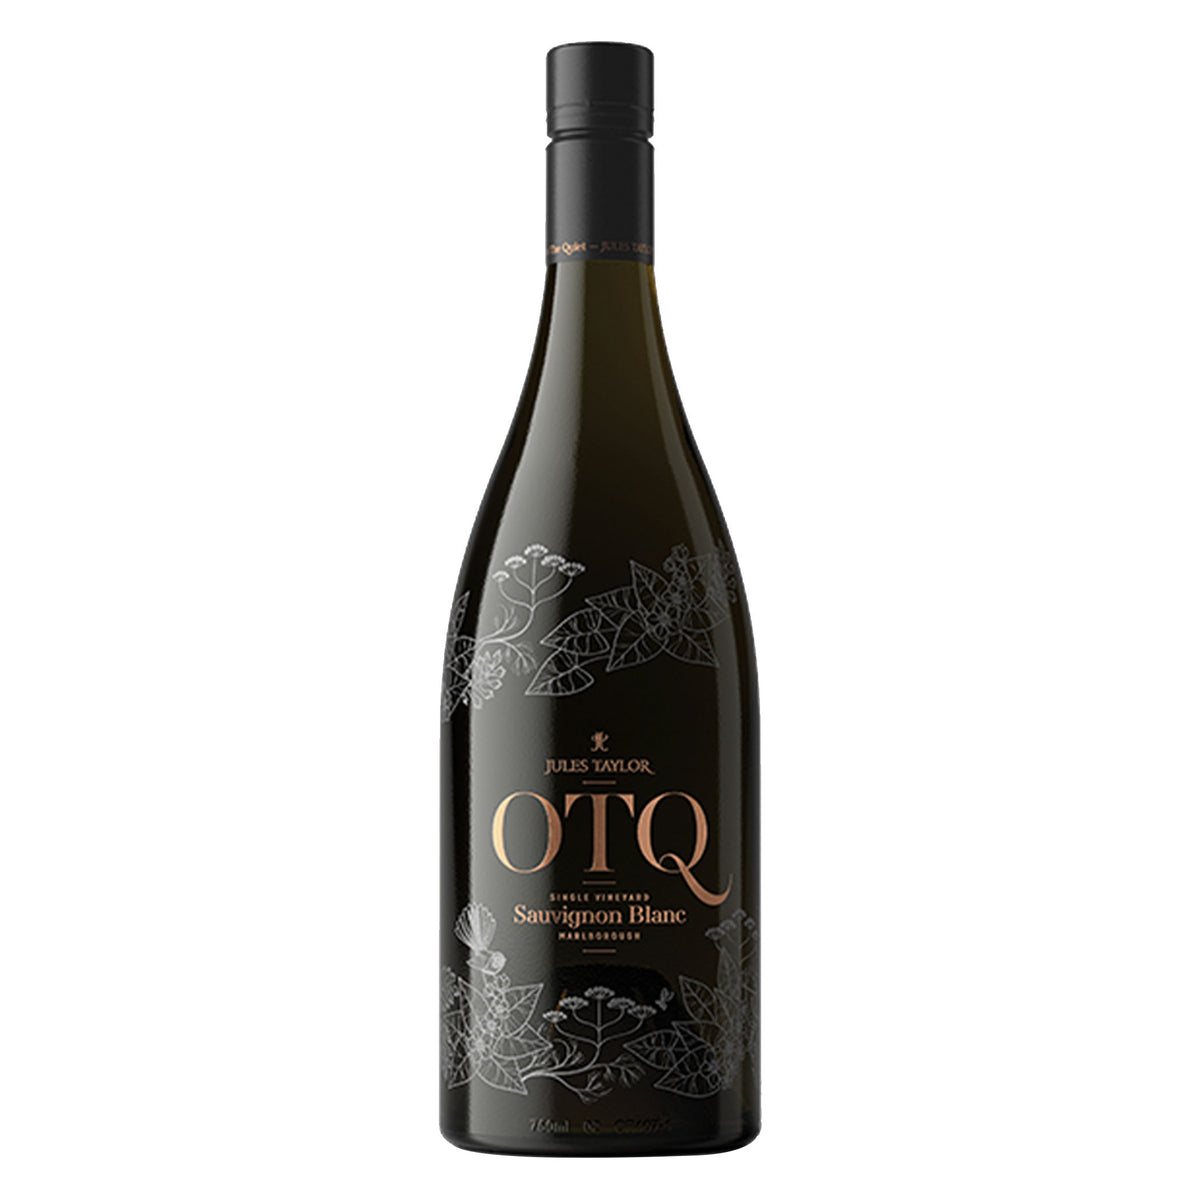 Jules Taylor OTQ Single Vineyard Sauvignon Blanc